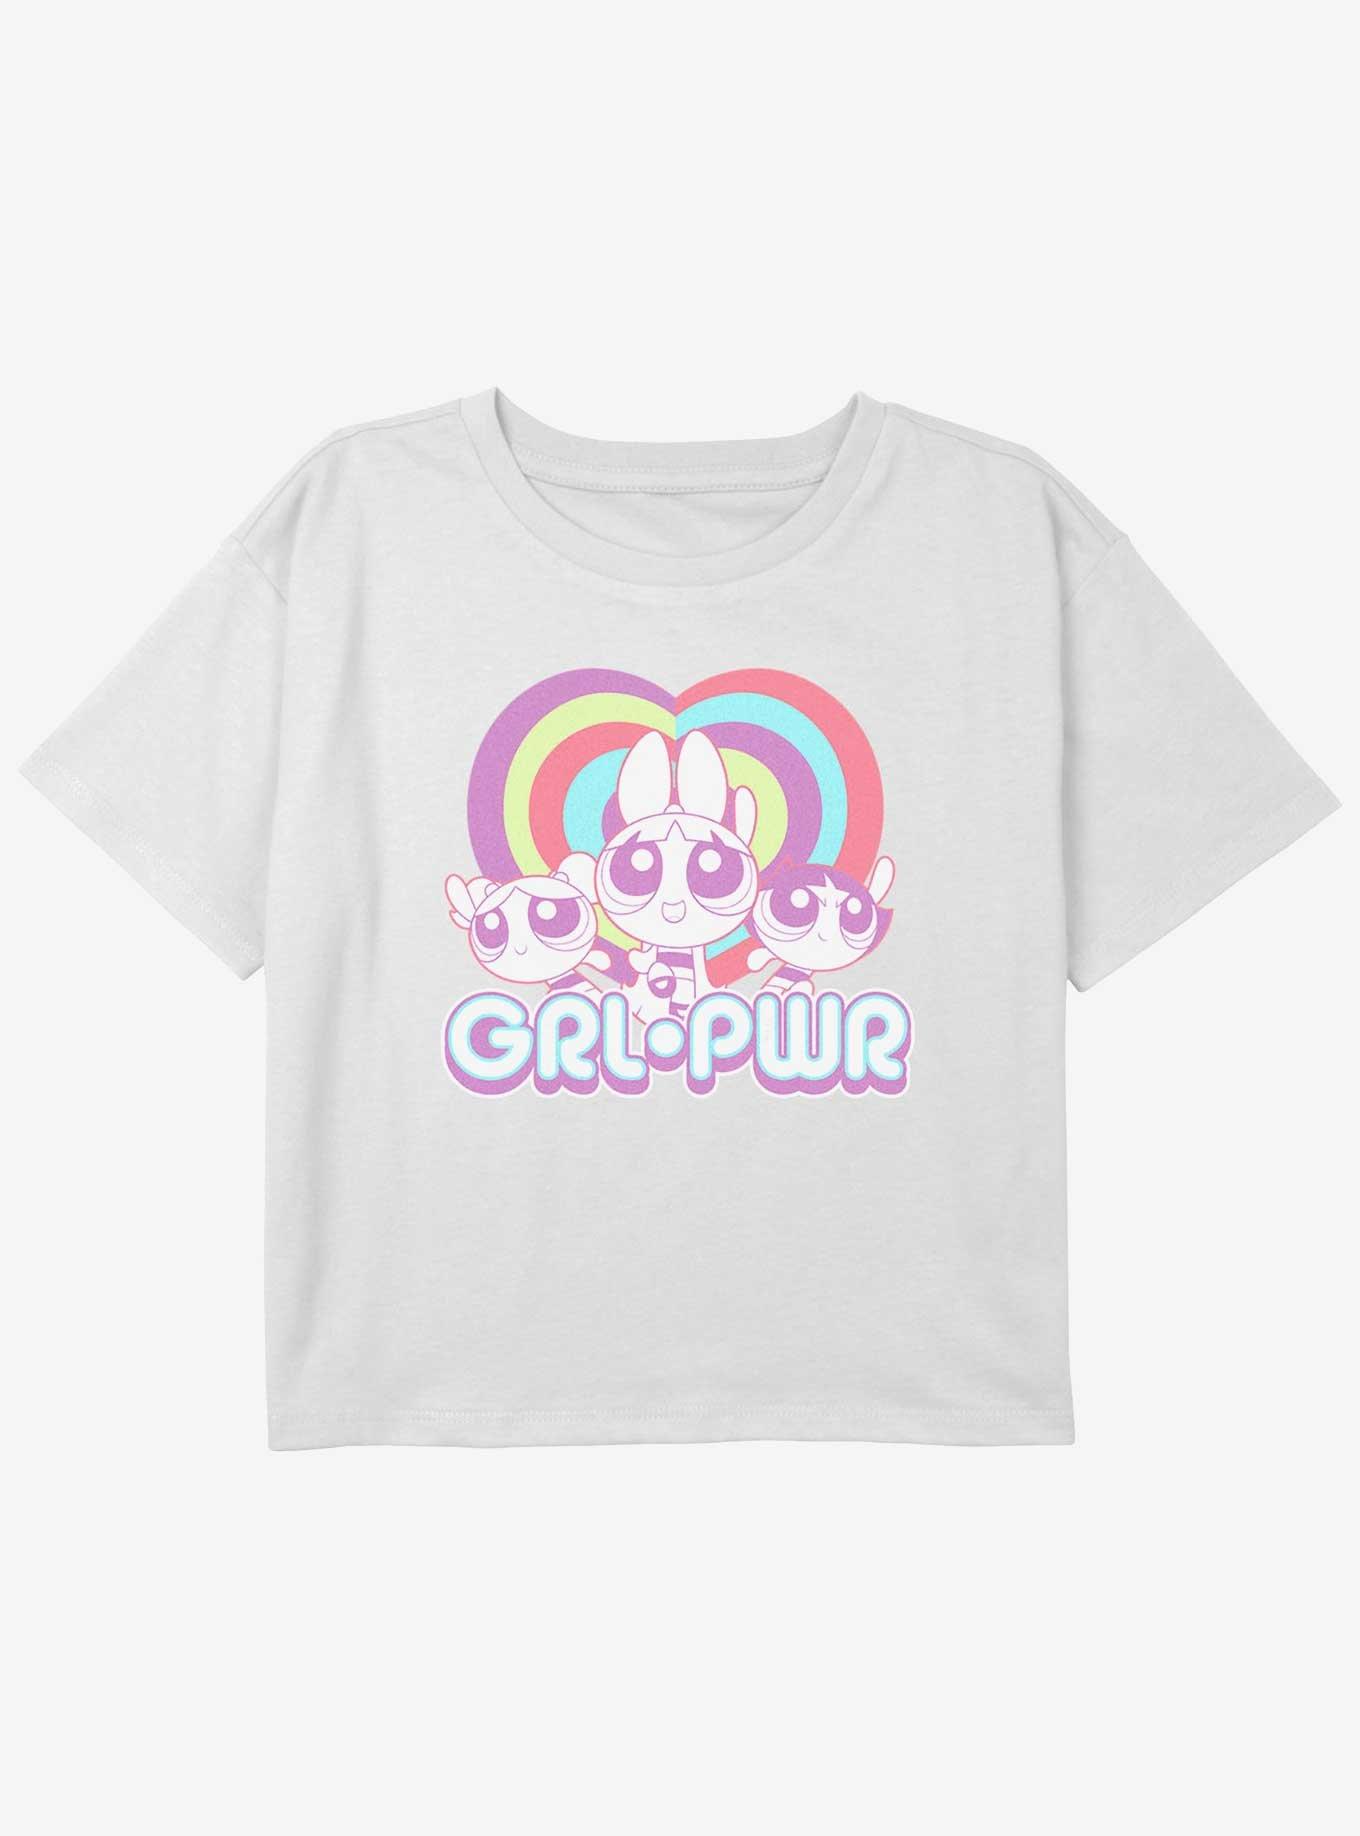 The Powerpuff Girls Pastel Grl Pwr Youth Girls Boxy Crop T-Shirt, , hi-res